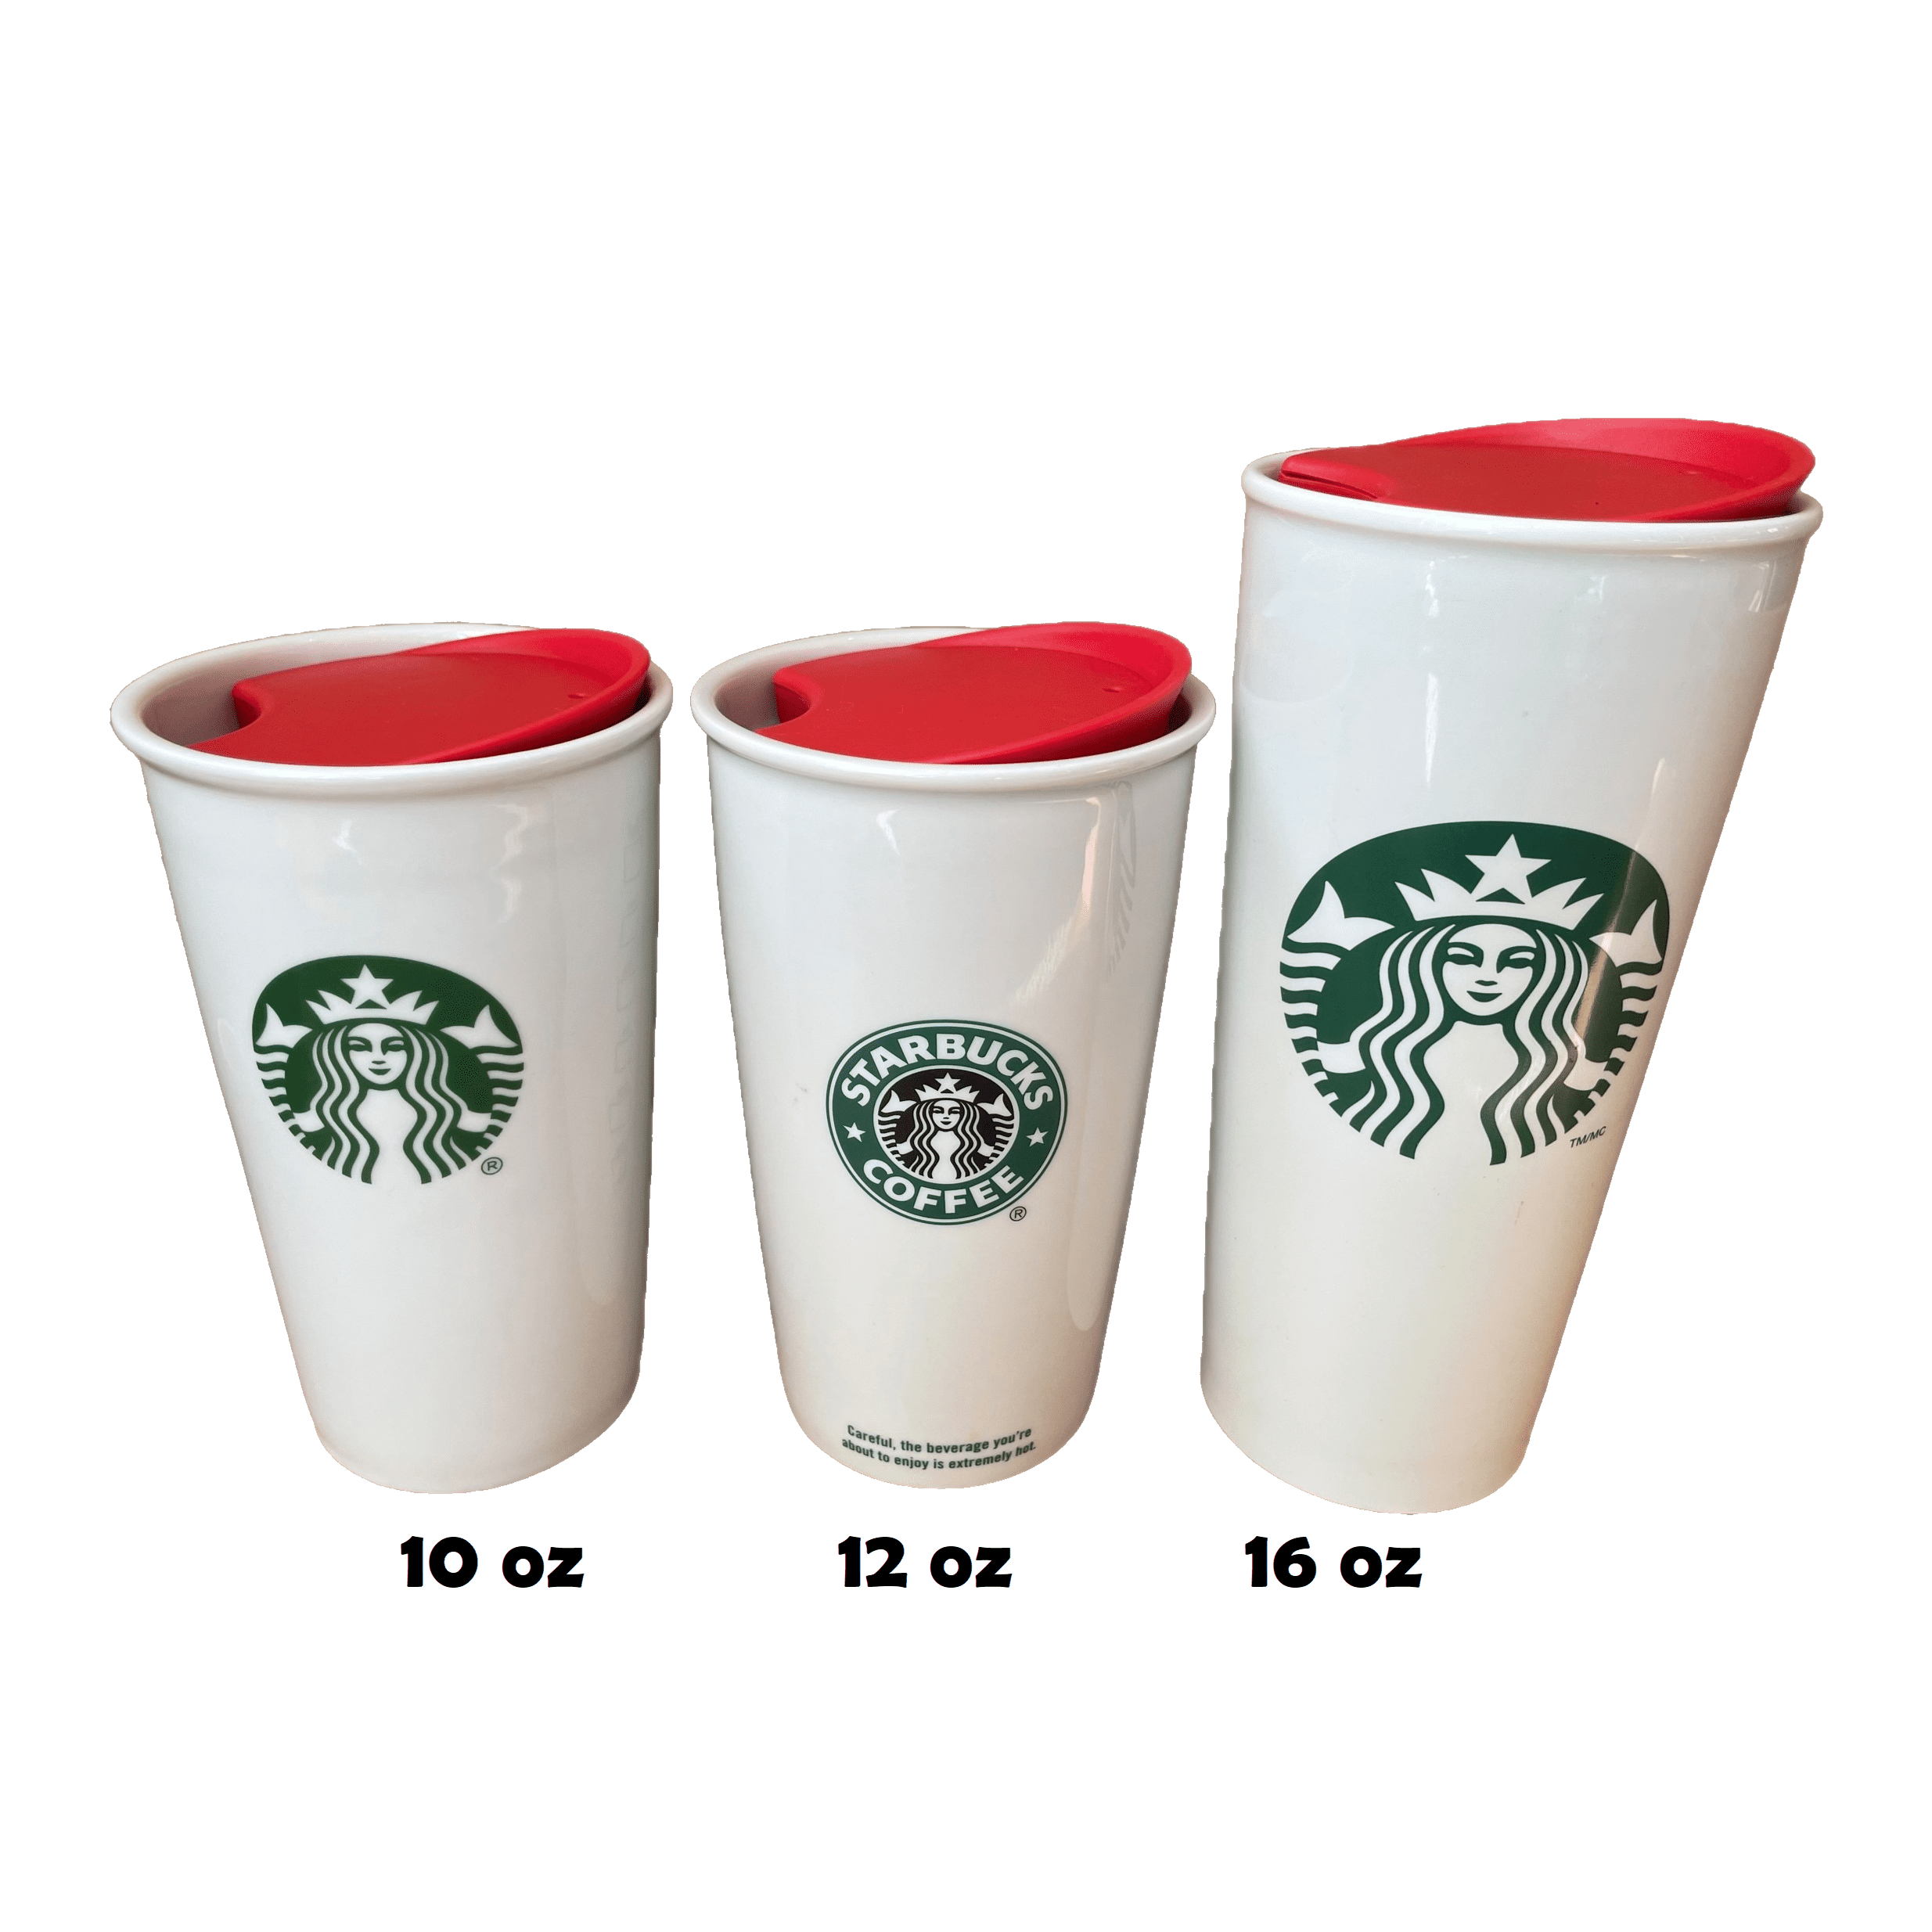 Green Replacement Lid for Starbucks Ceramic Travel Mugs